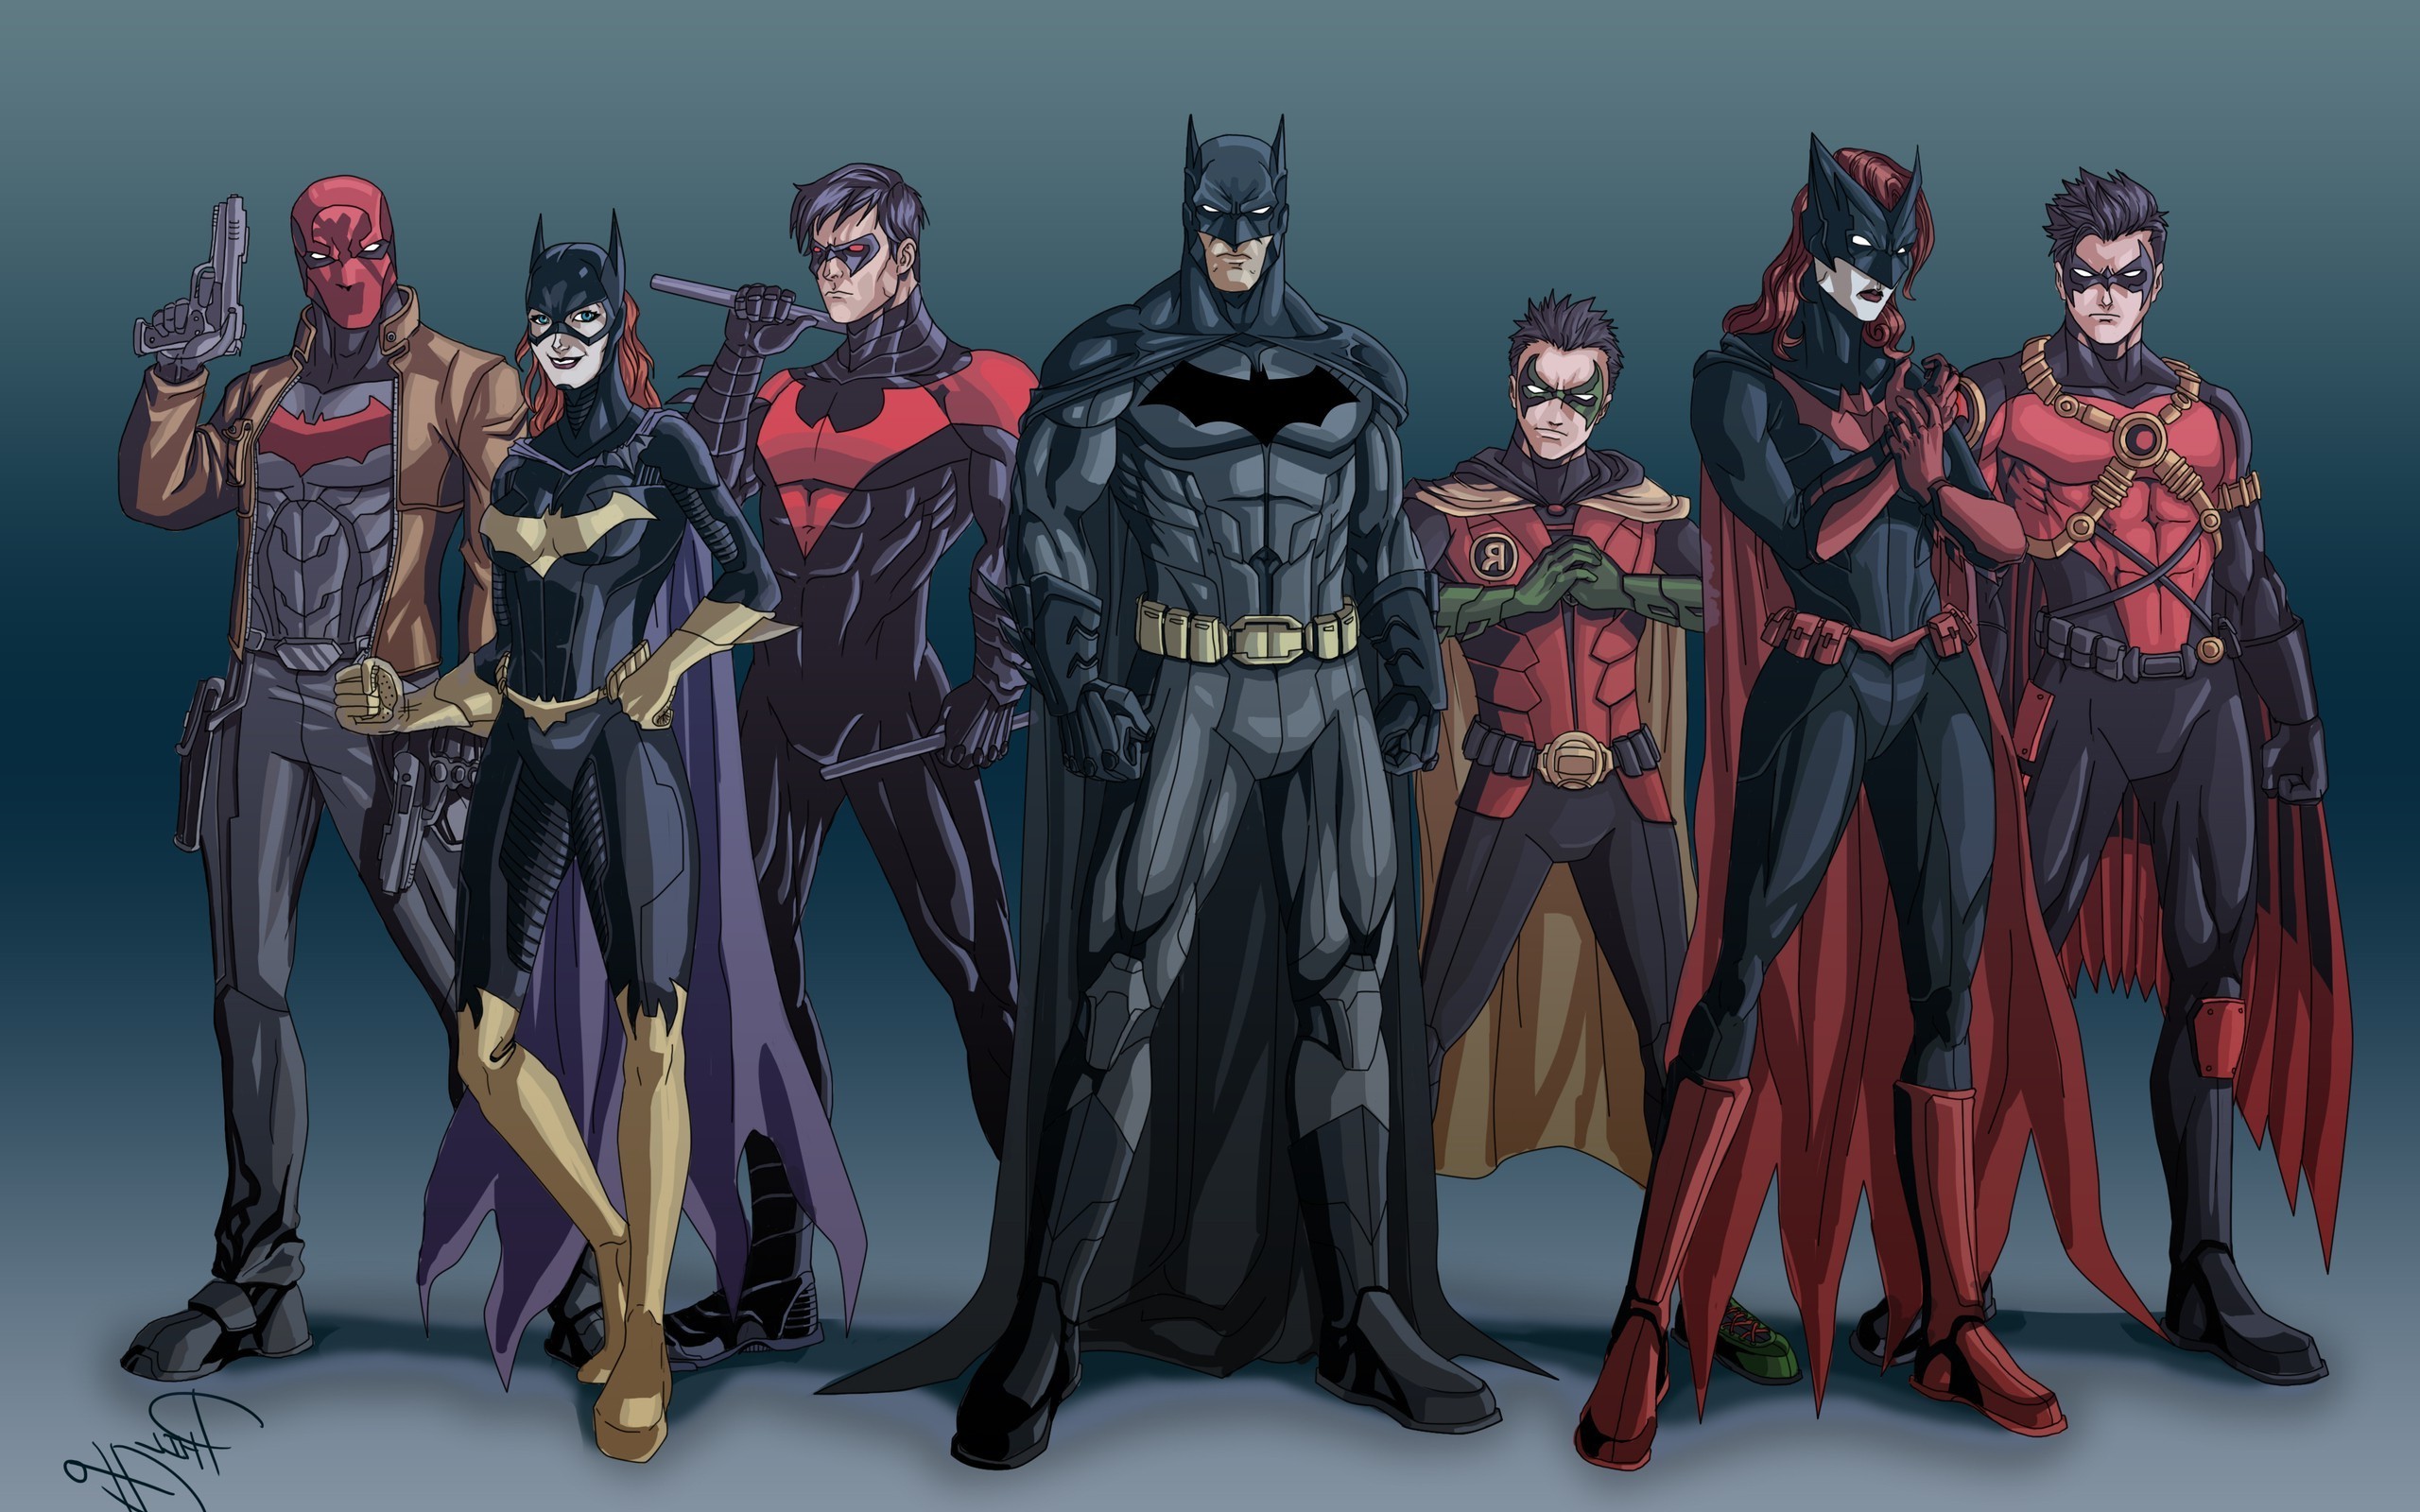 robin wallpaper,fictional character,batman,superhero,justice league,costume